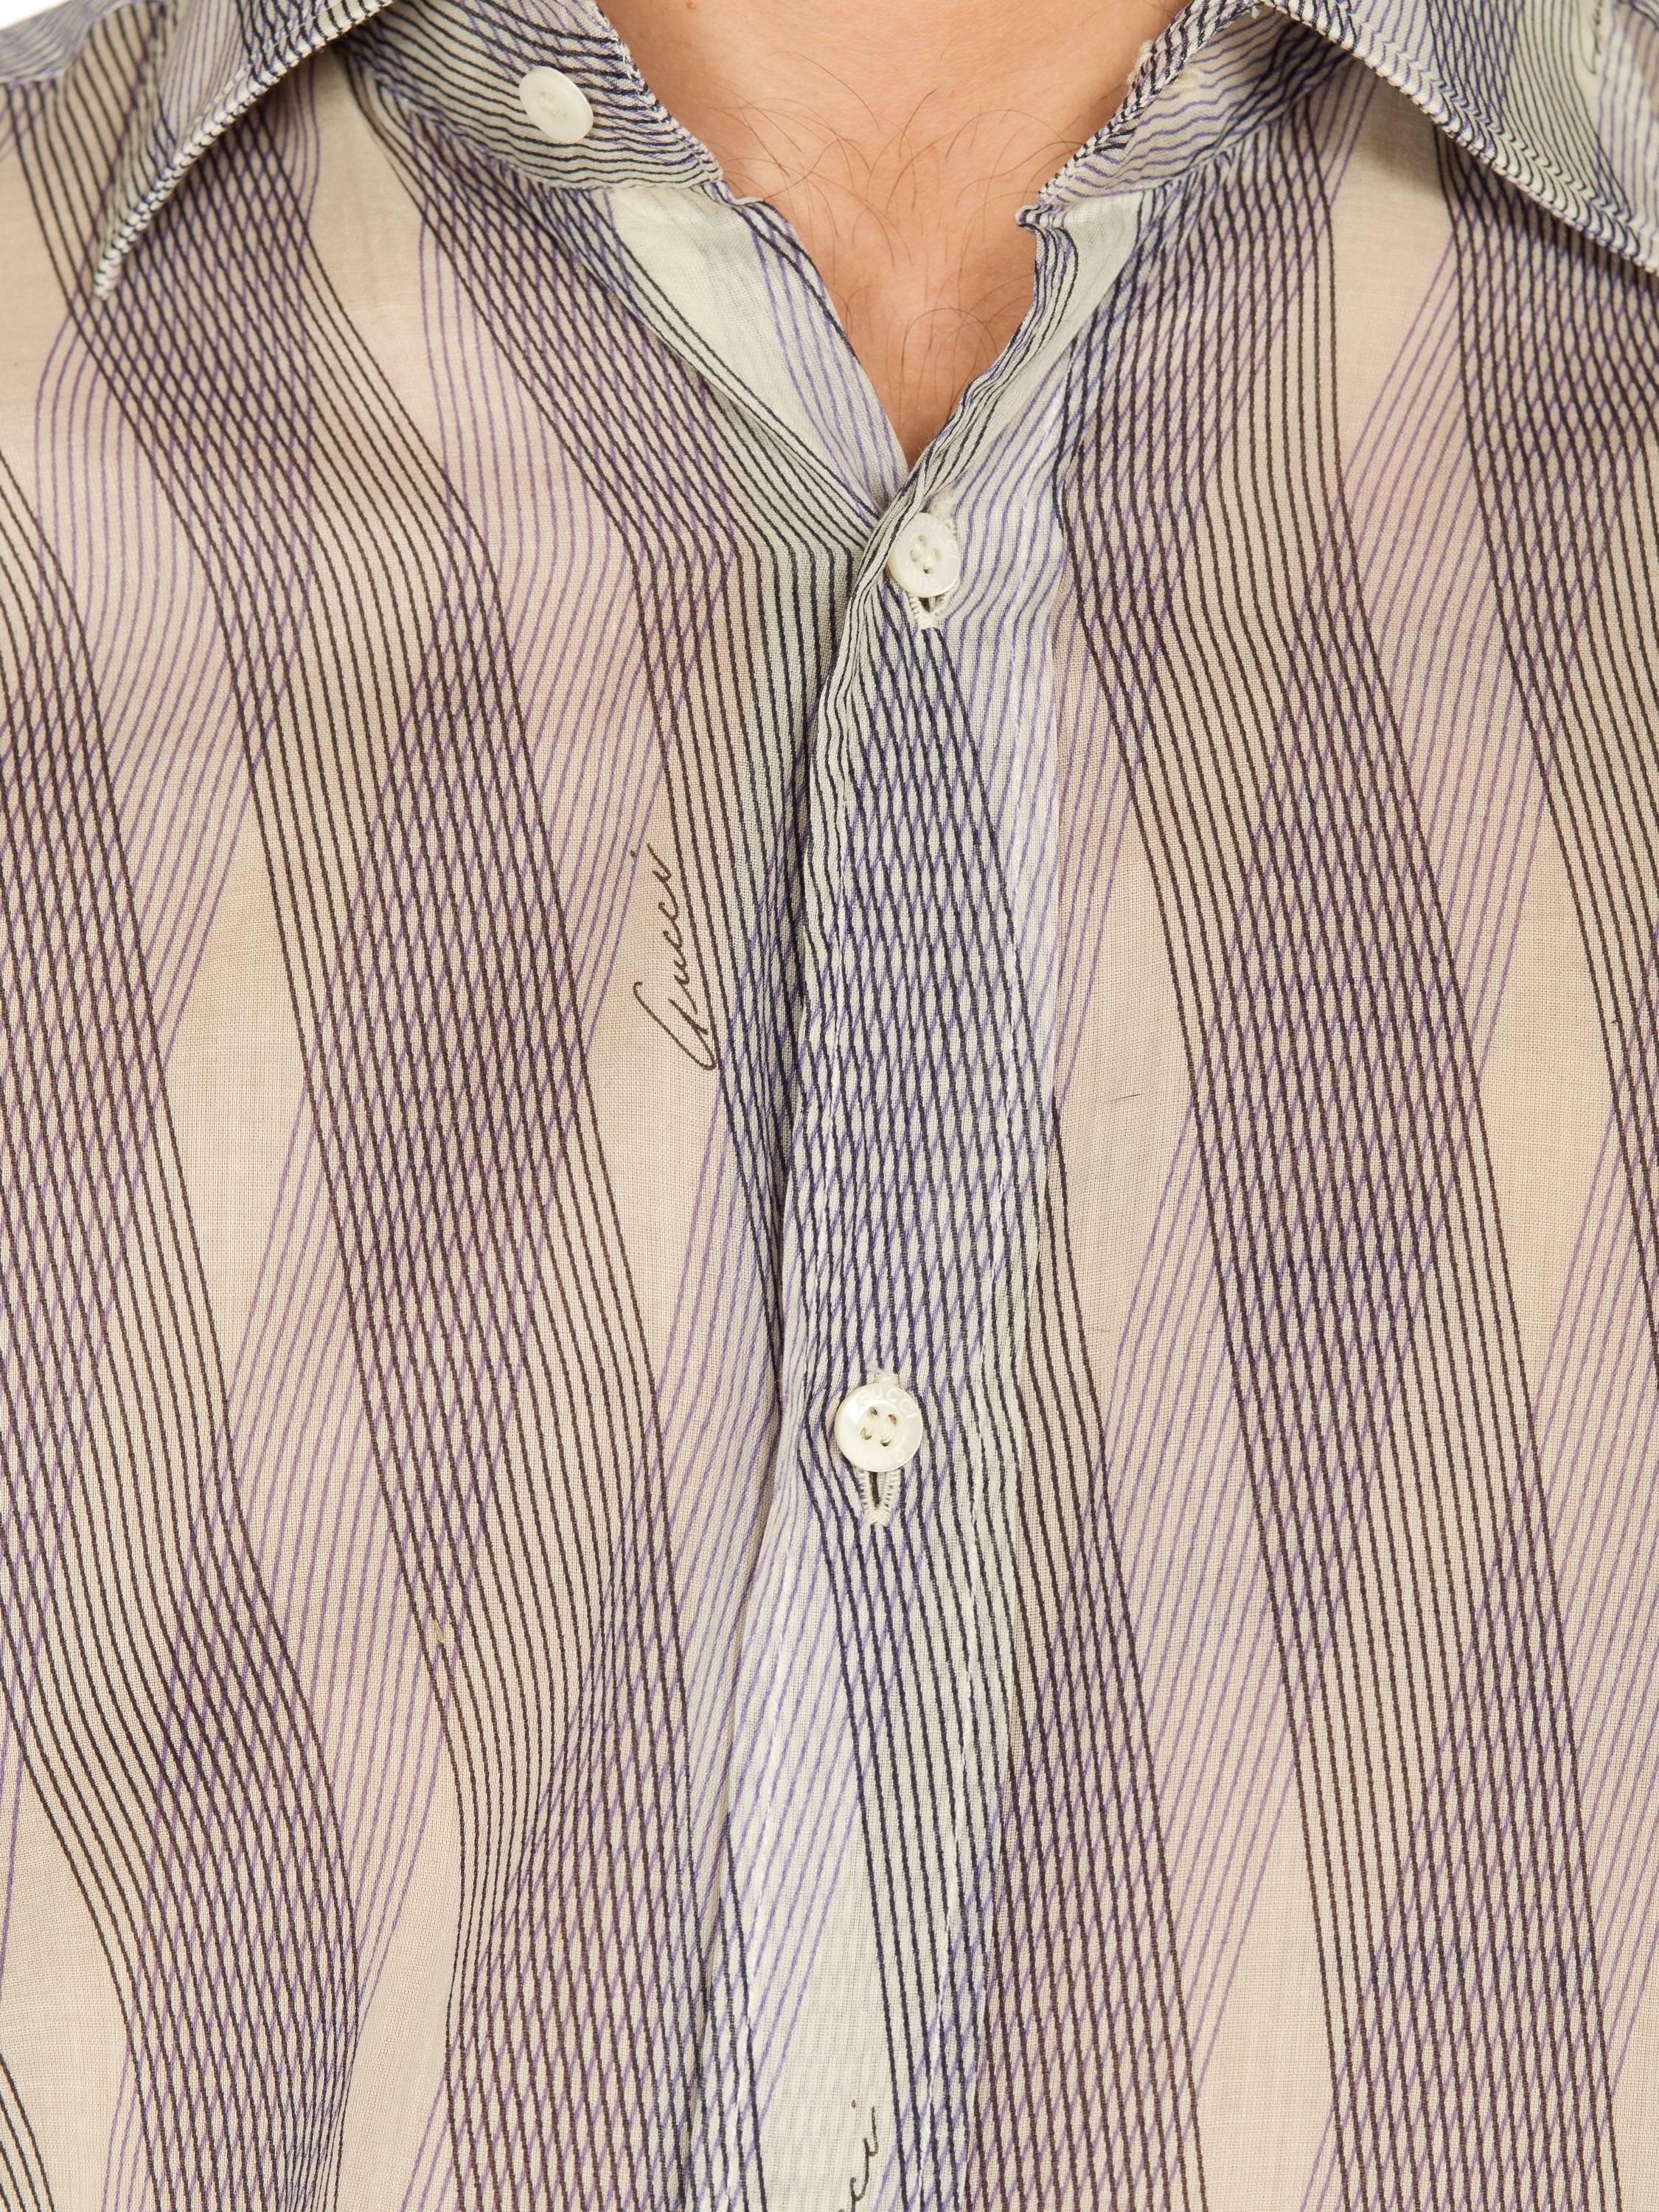 1990S GUCCI Men's 70S Style Sheer Diagonal Striped Shirt 8